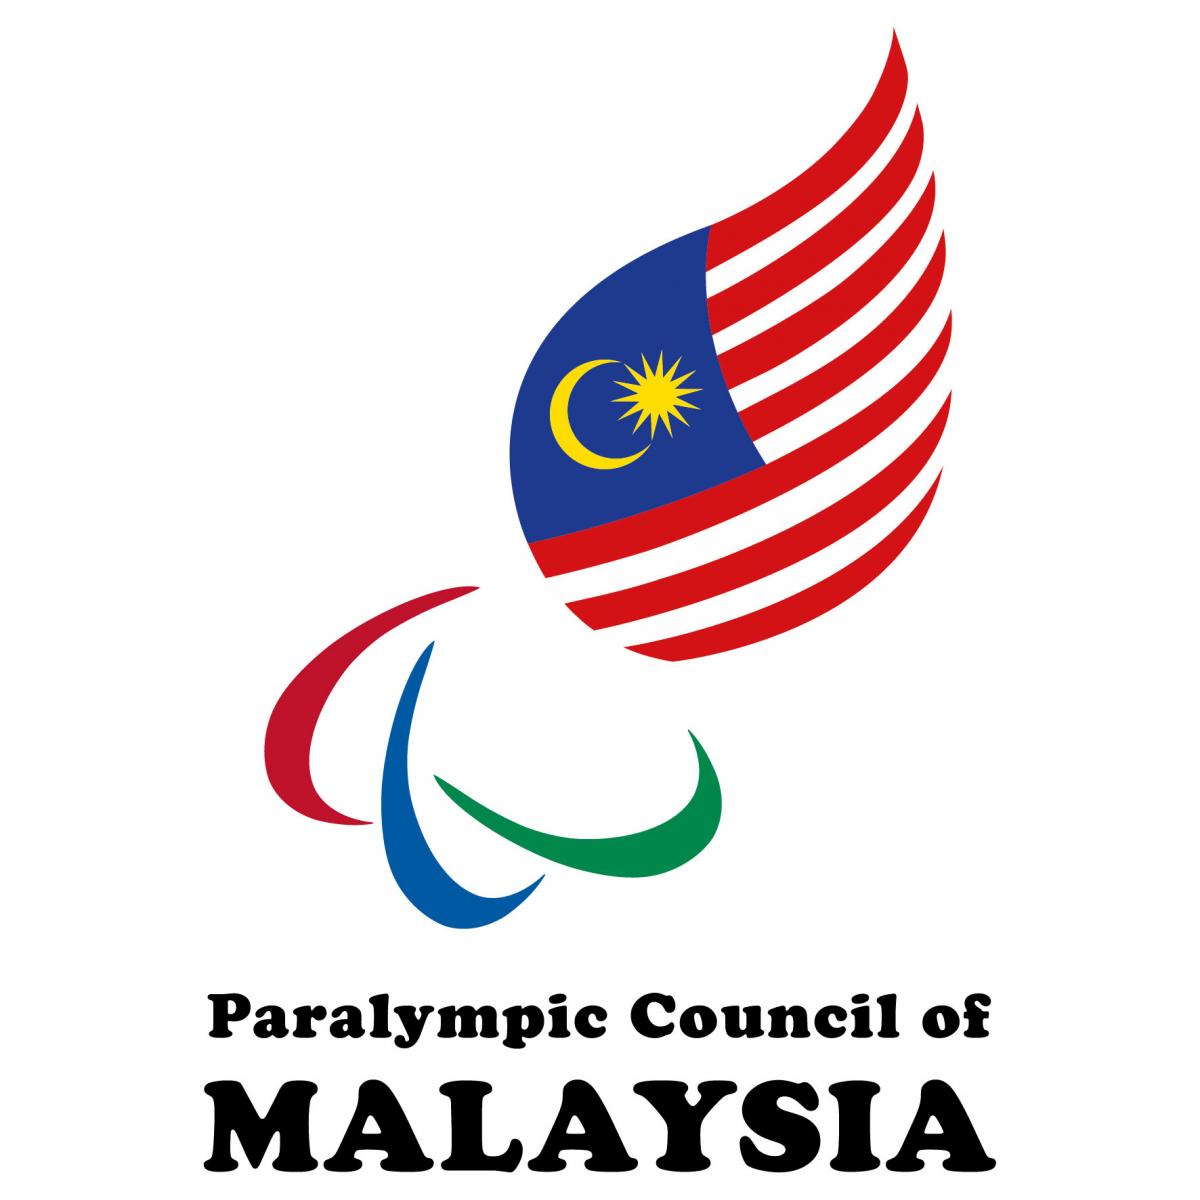 NPC Malaysia logo.